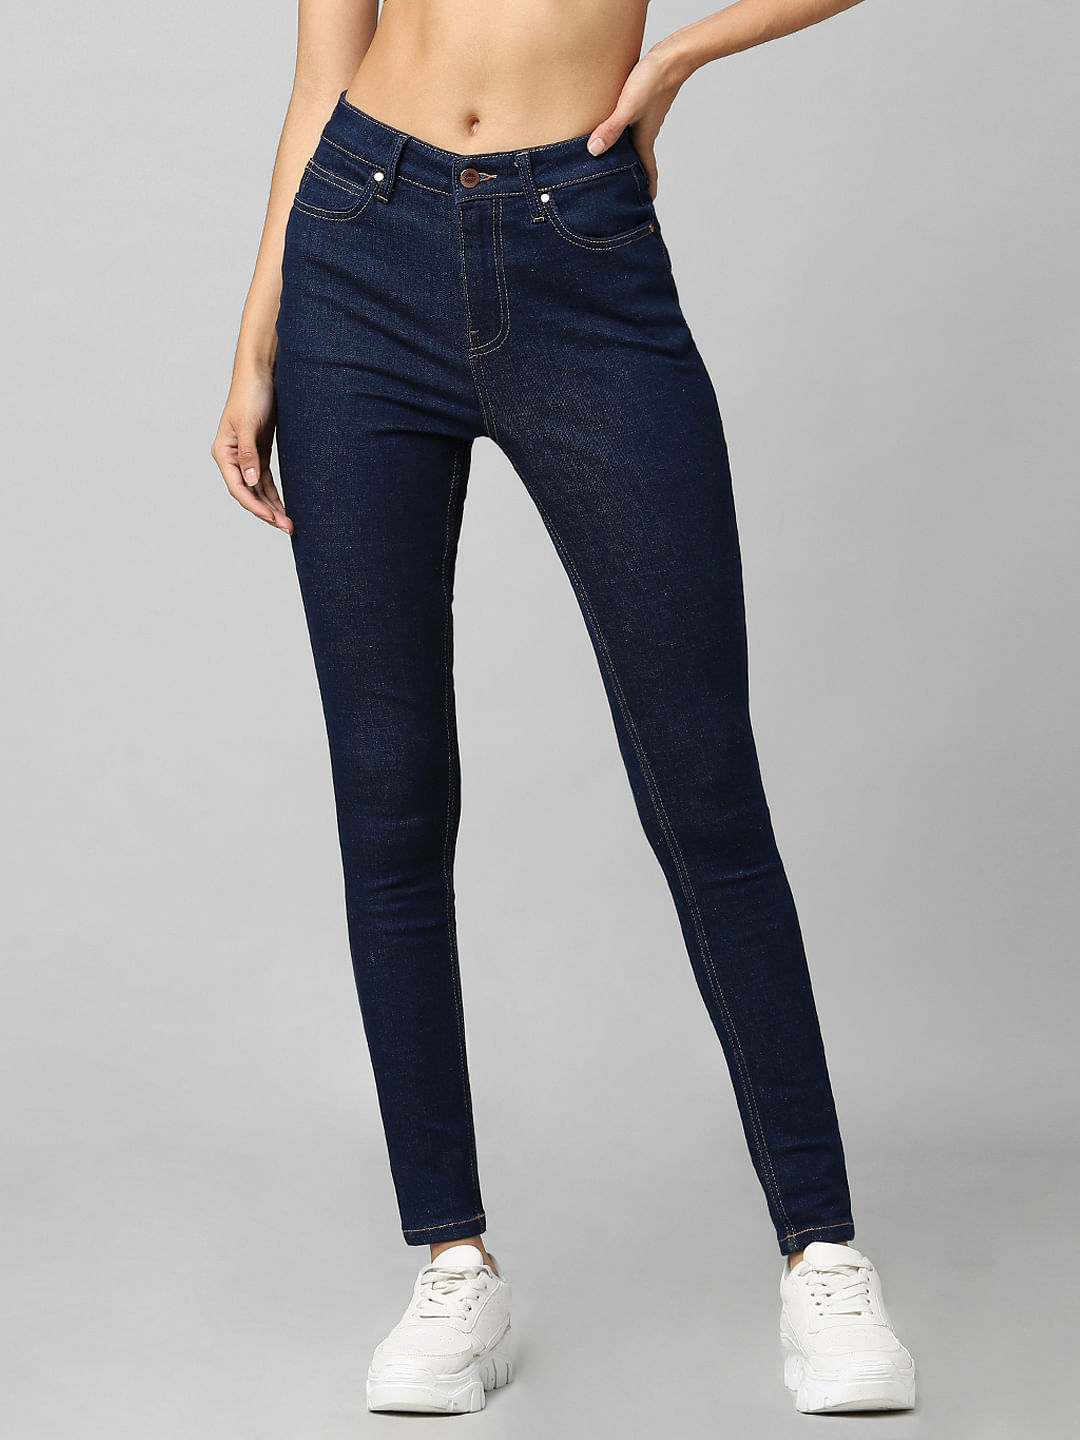 21 Best HighWaist Jeans for Women 2022 Madewell Levis  More  Glamour